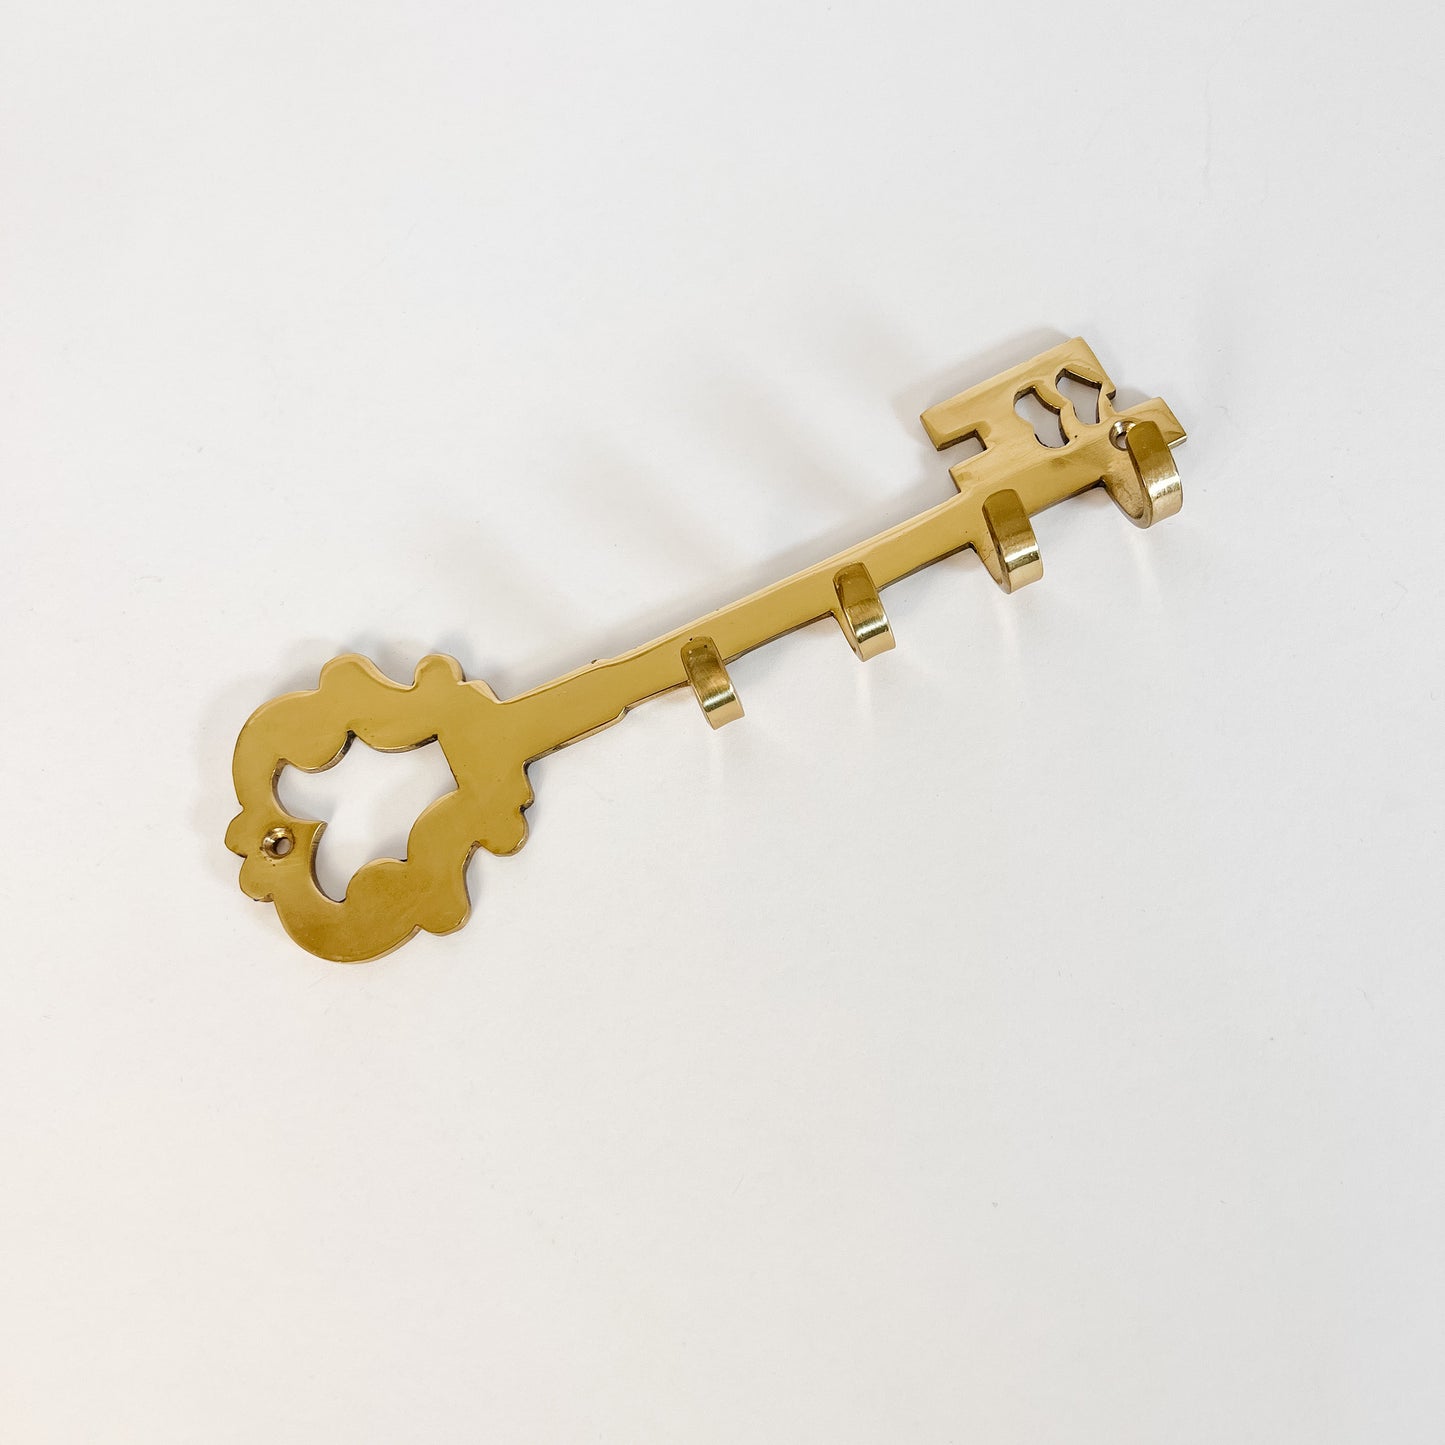 key shaped key holder